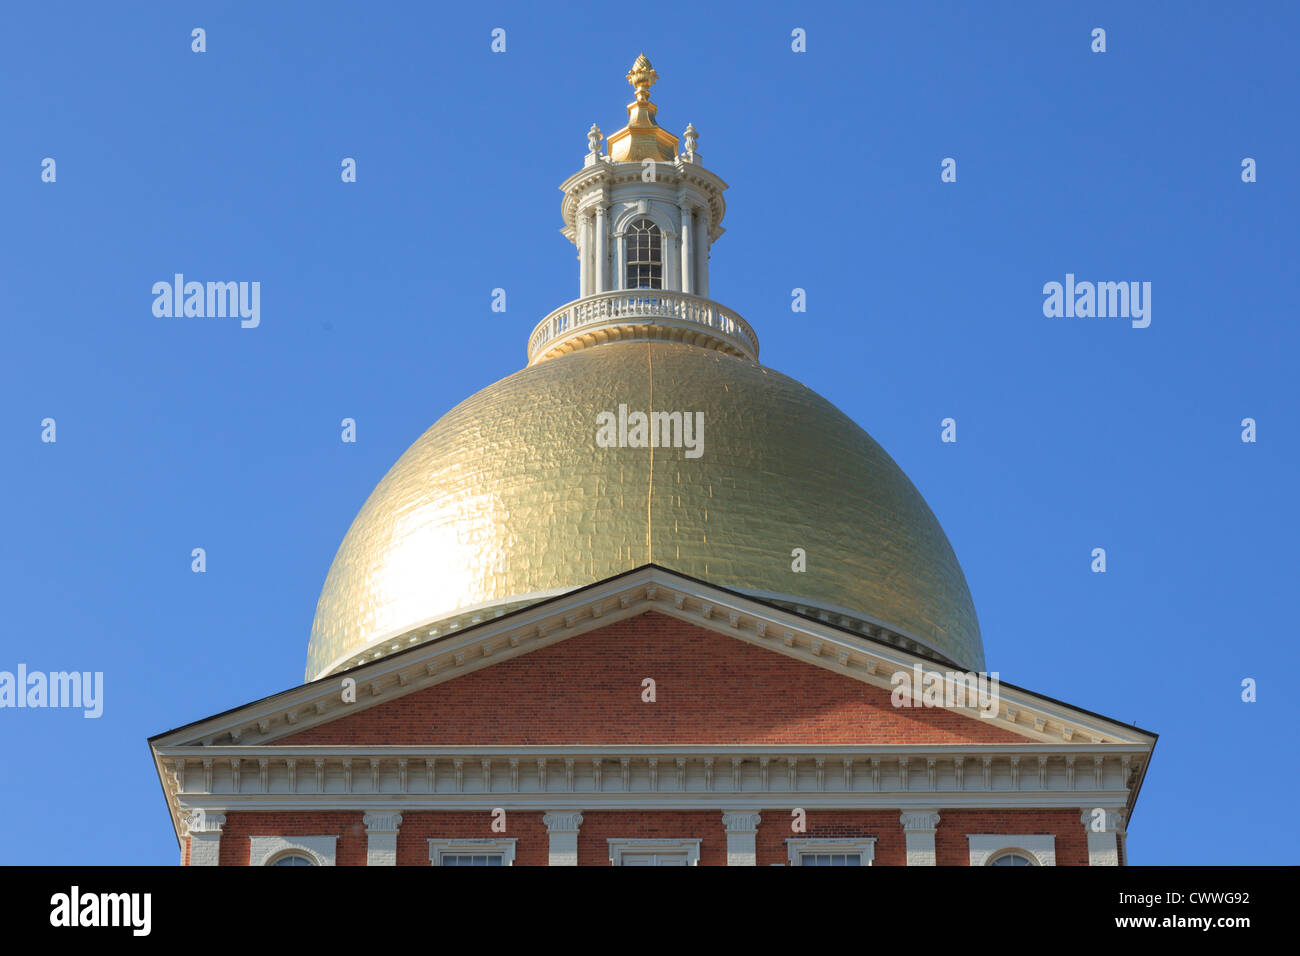 La Old State House per il Commonwealth of Massachusetts a Boston, Massachusetts - Stati Uniti Foto Stock